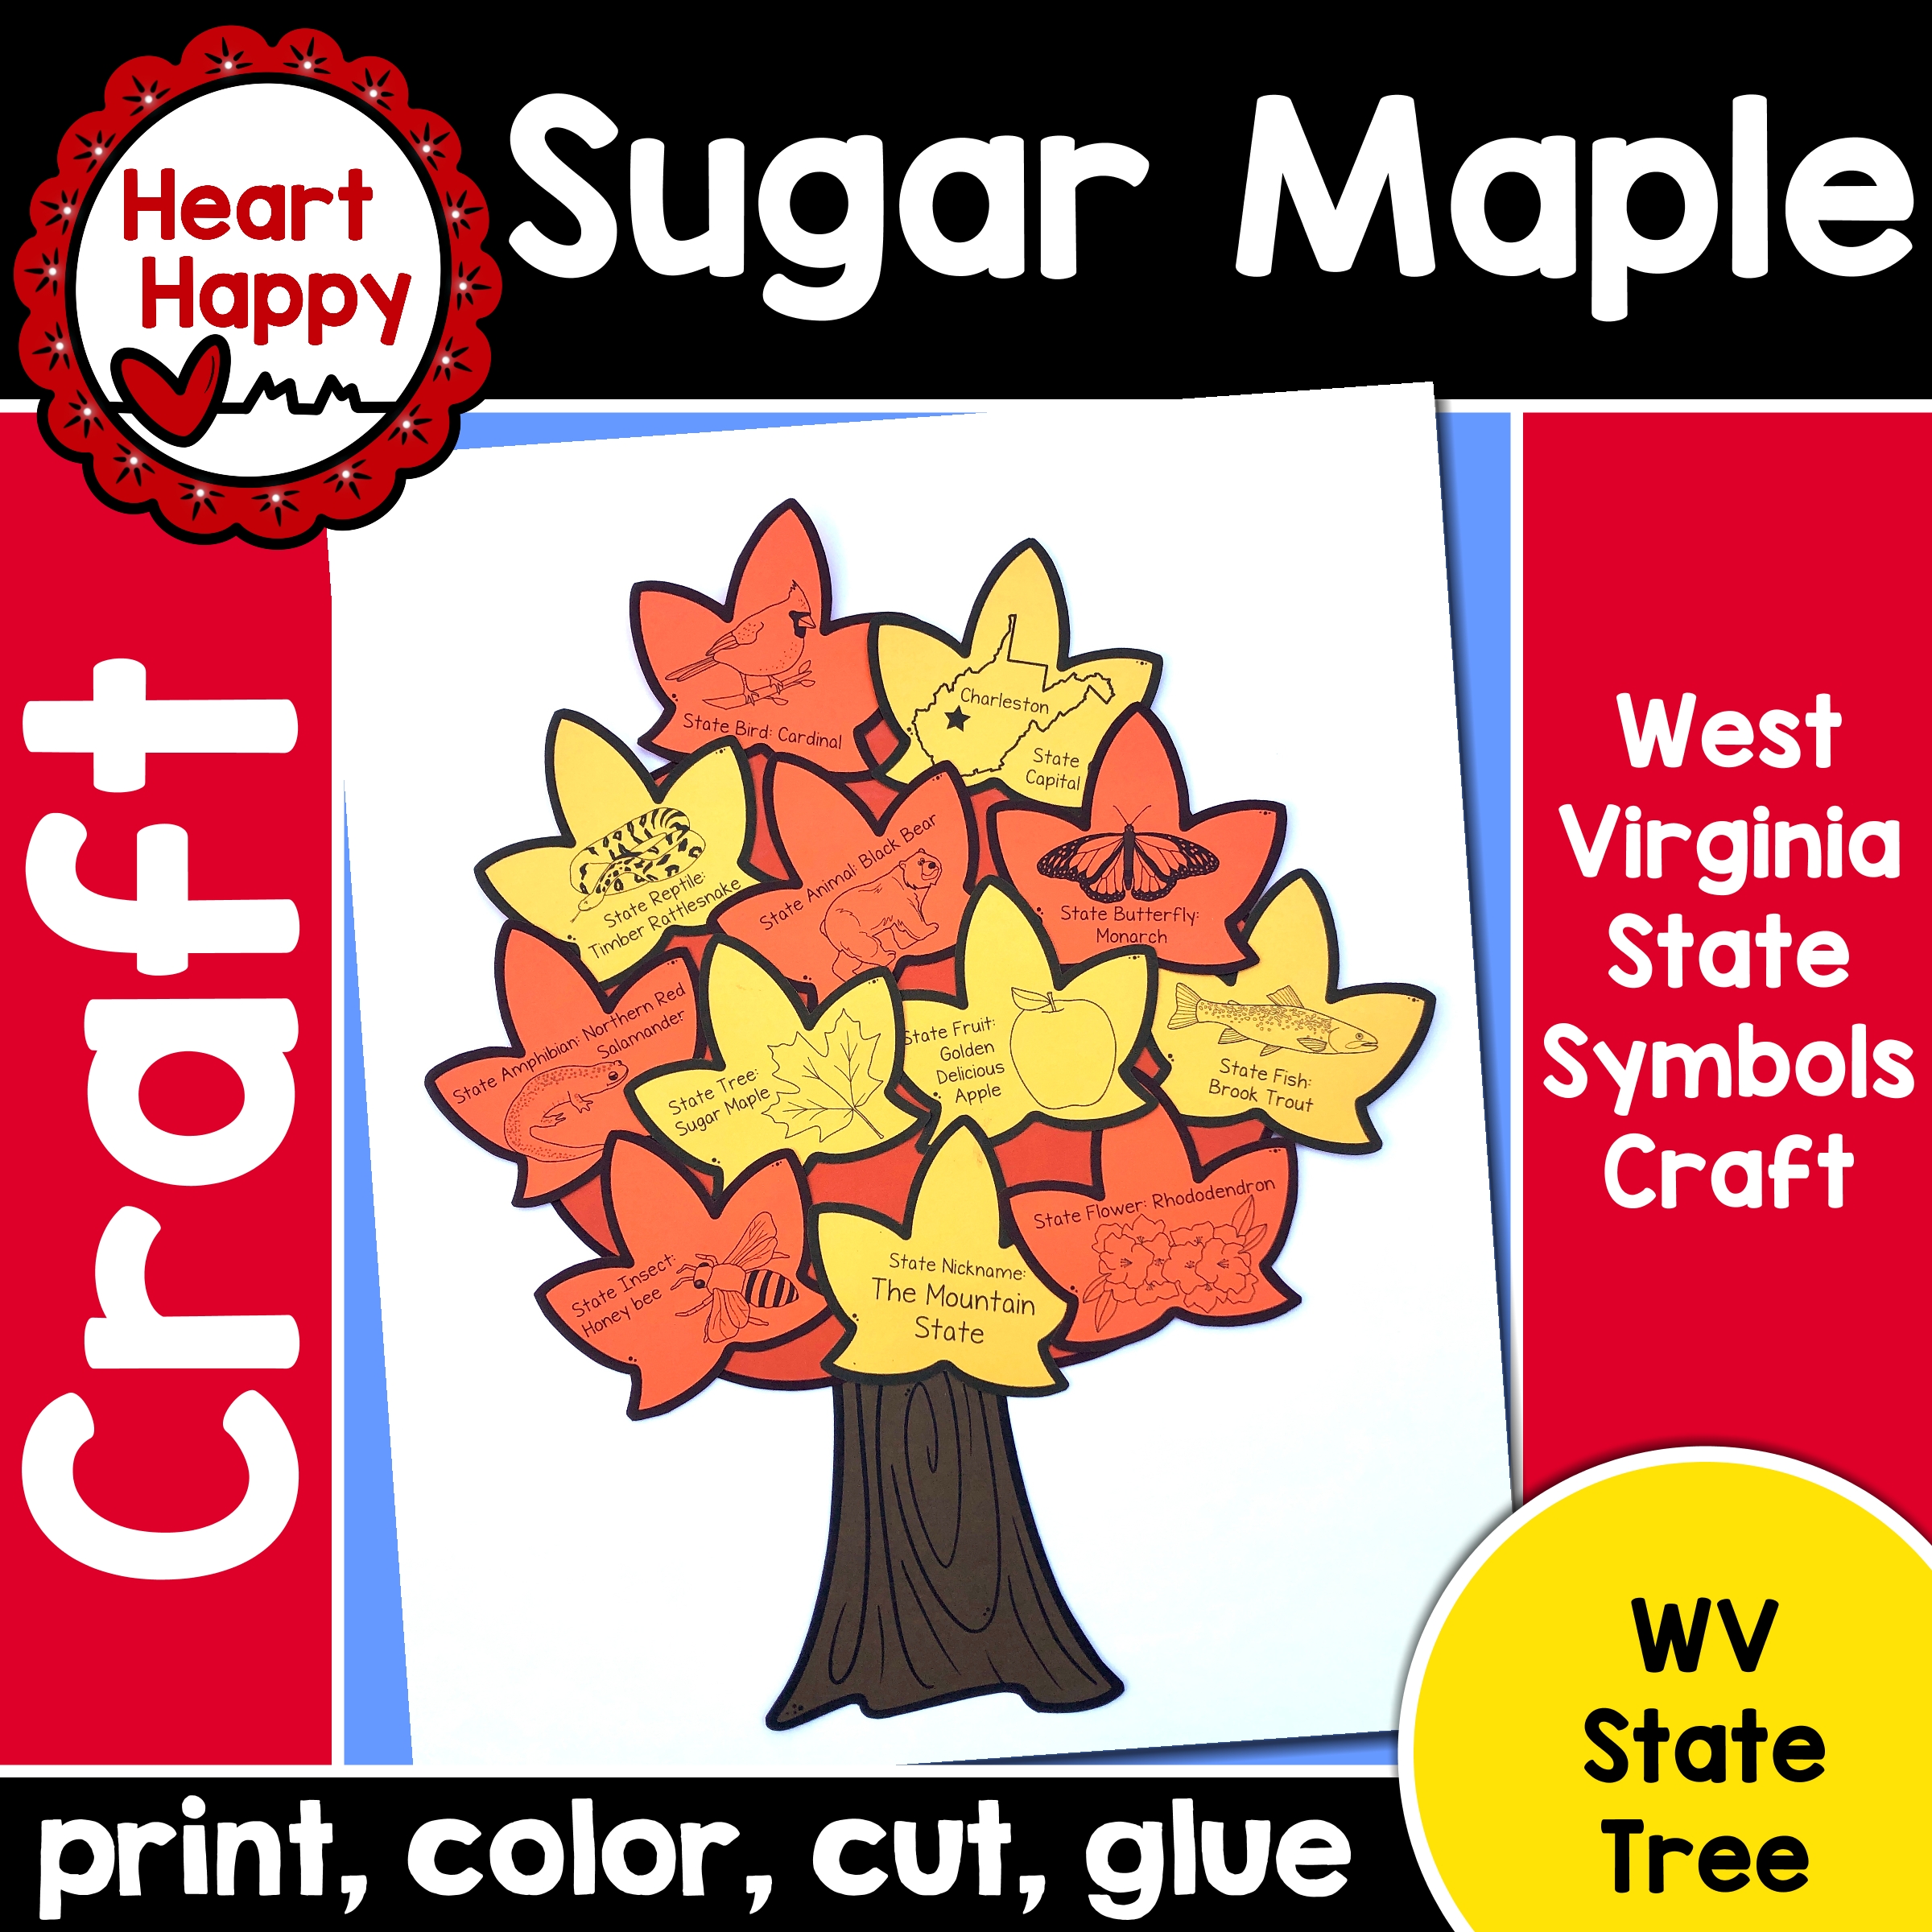 West Virginia Sugar Maple Tree State Symbols Craft | Fall Craft's featured image